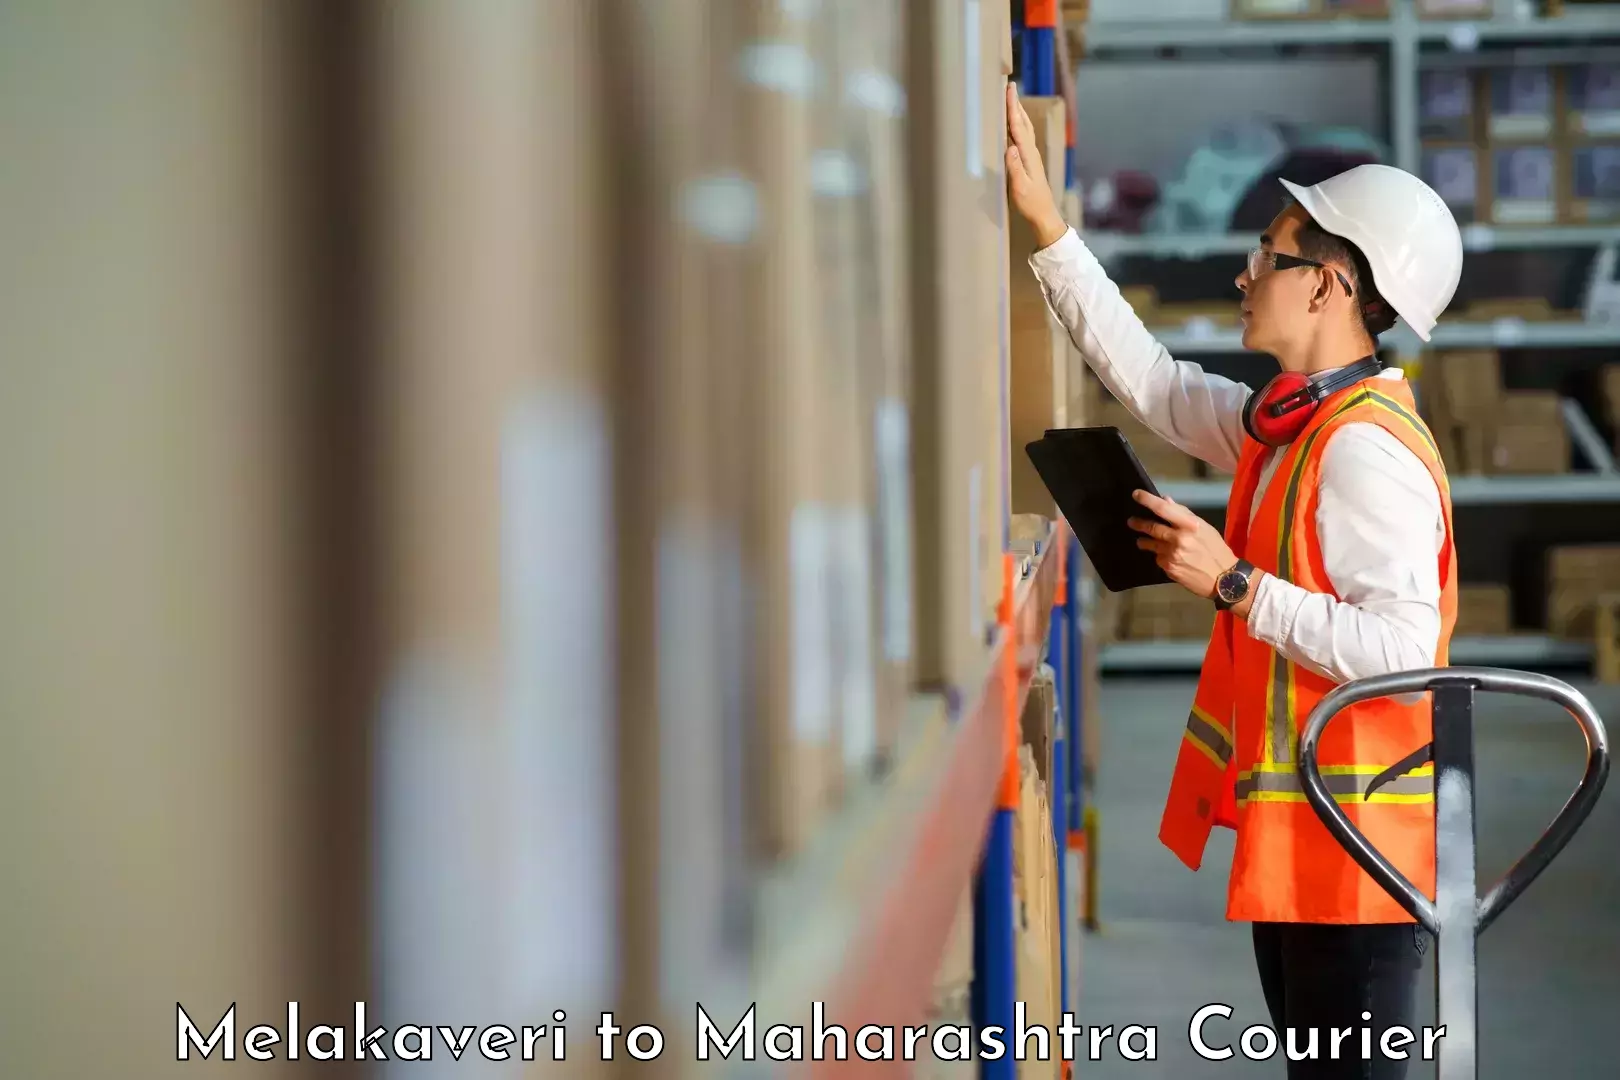 Courier service innovation in Melakaveri to Gadchiroli